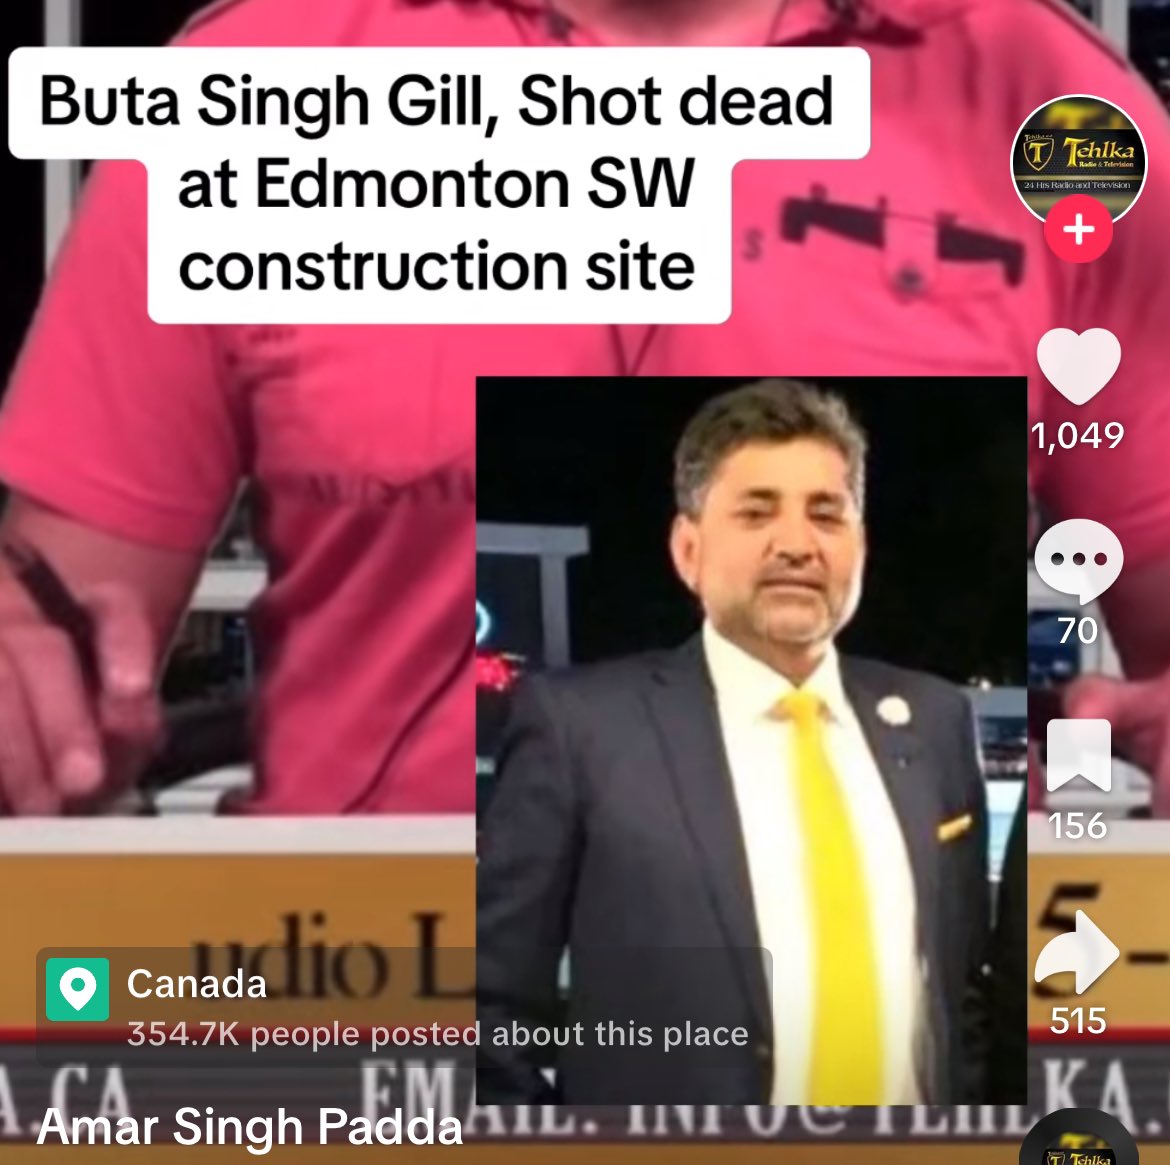 Disturbing News again coming from Kanaada,Punjabi man killed other Punjabi 😢@JaipurDialogues @Sanjay_Dixit @Bhaveshlivelife @trollove1 @PurnimaNath